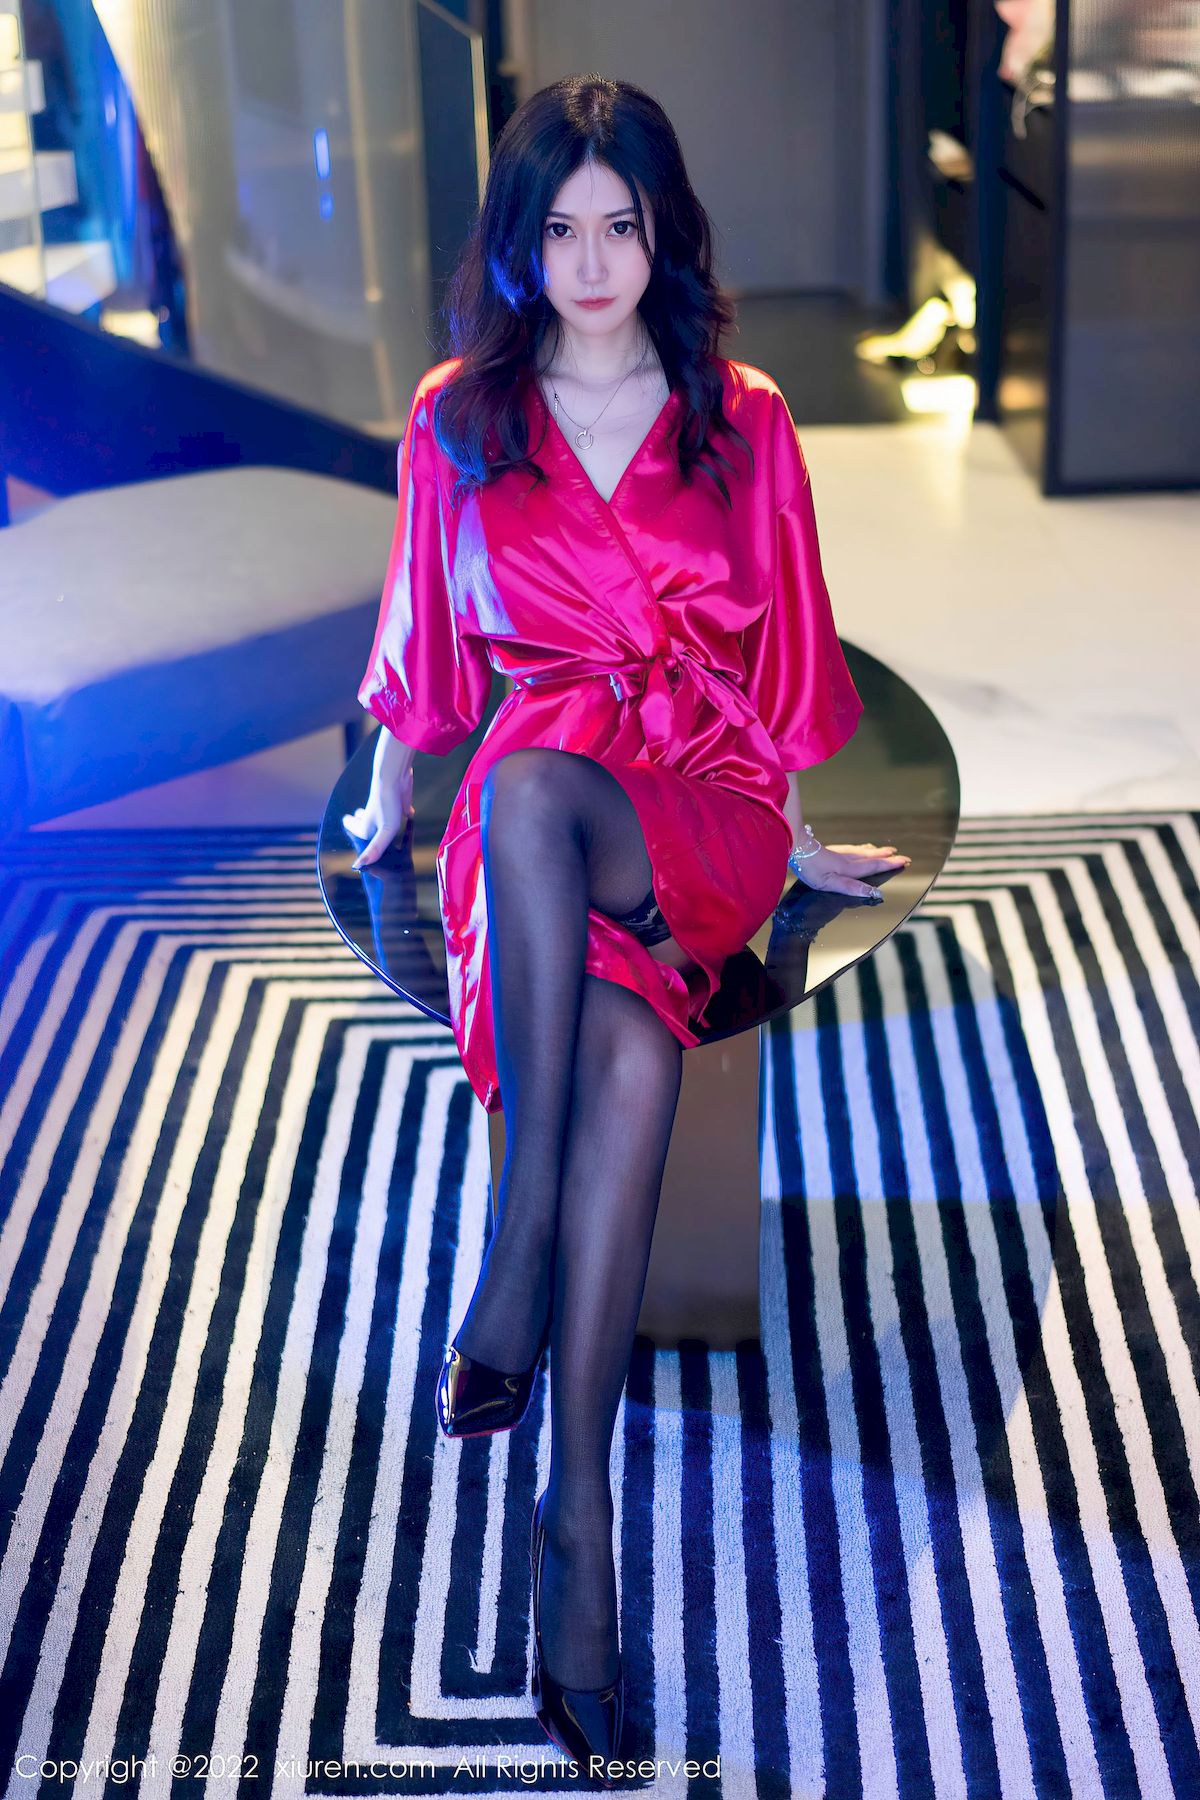 laura阿姣 - 红色睡裙+诱人黑丝性感写真